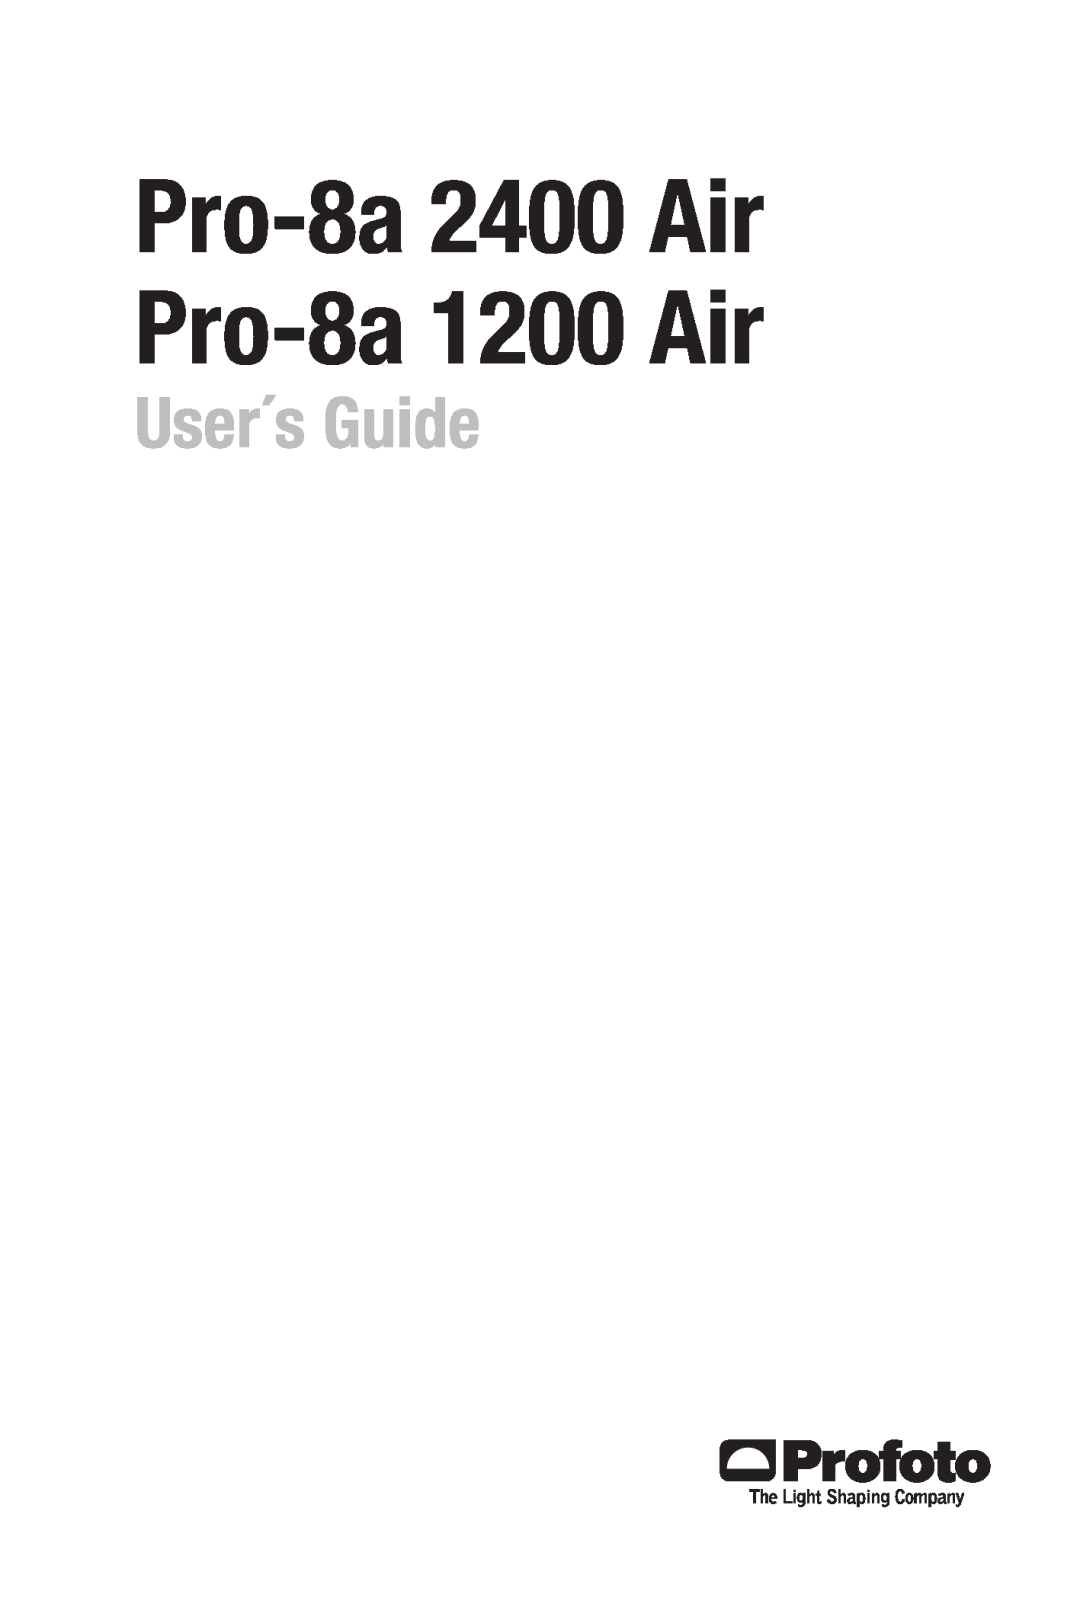 Profoto Pro-8a 1200 Air, Pro-8a 2400 Air manual Pro-8a2400 Air Pro-8a1200 Air, User´s Guide 